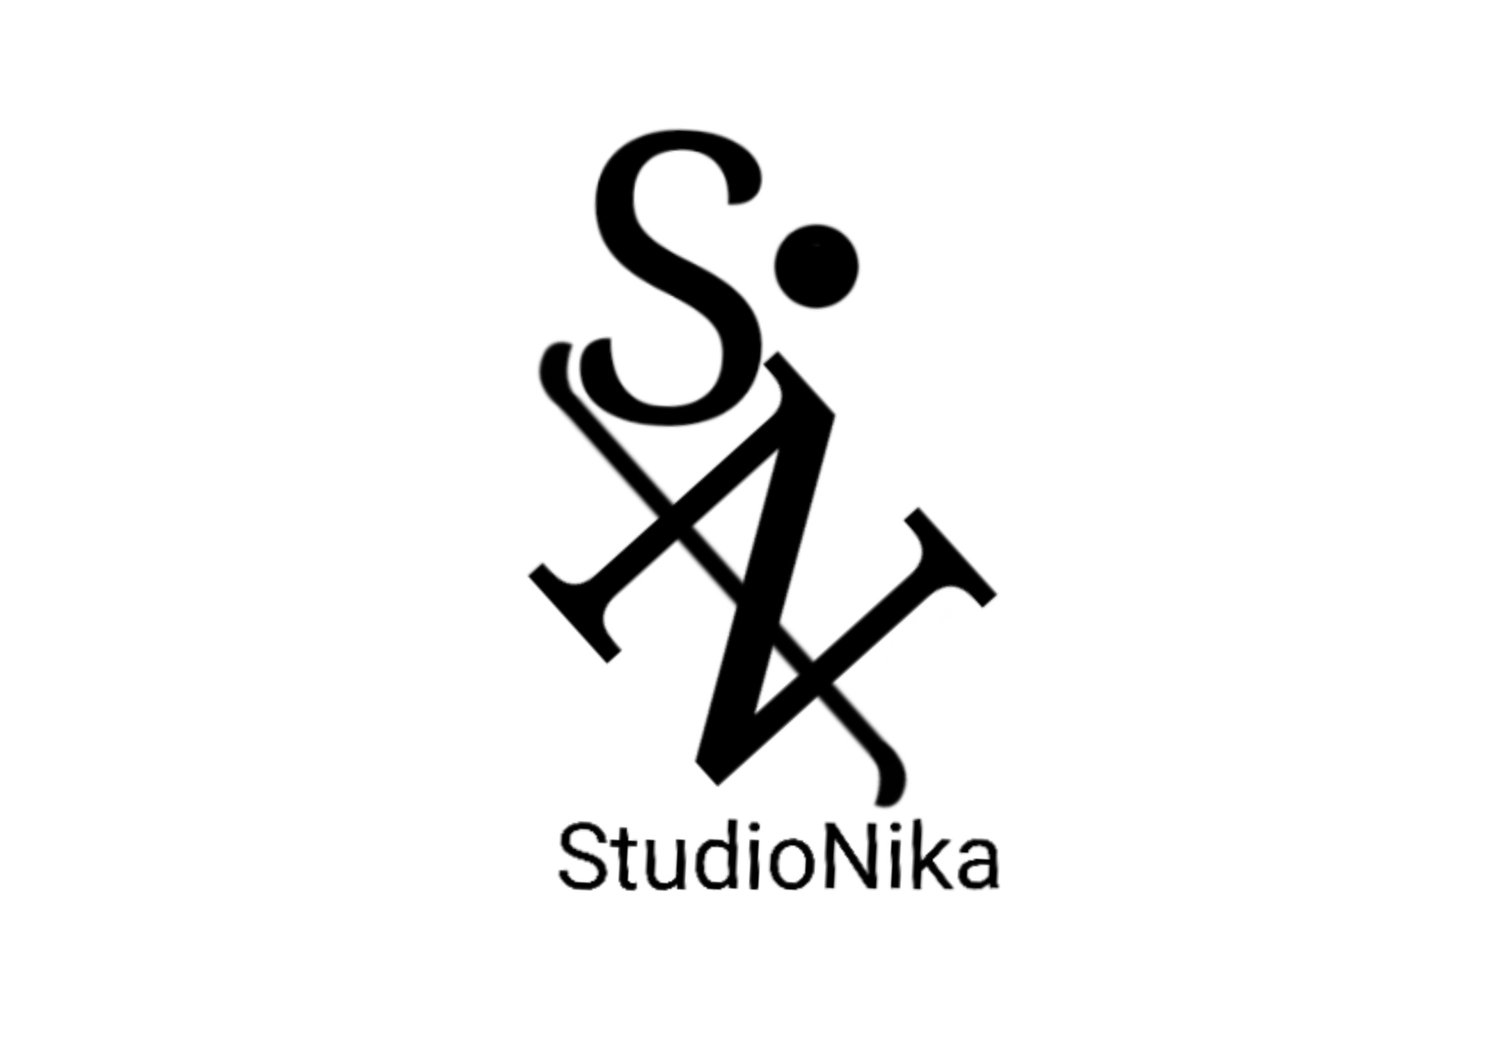 StudioNika